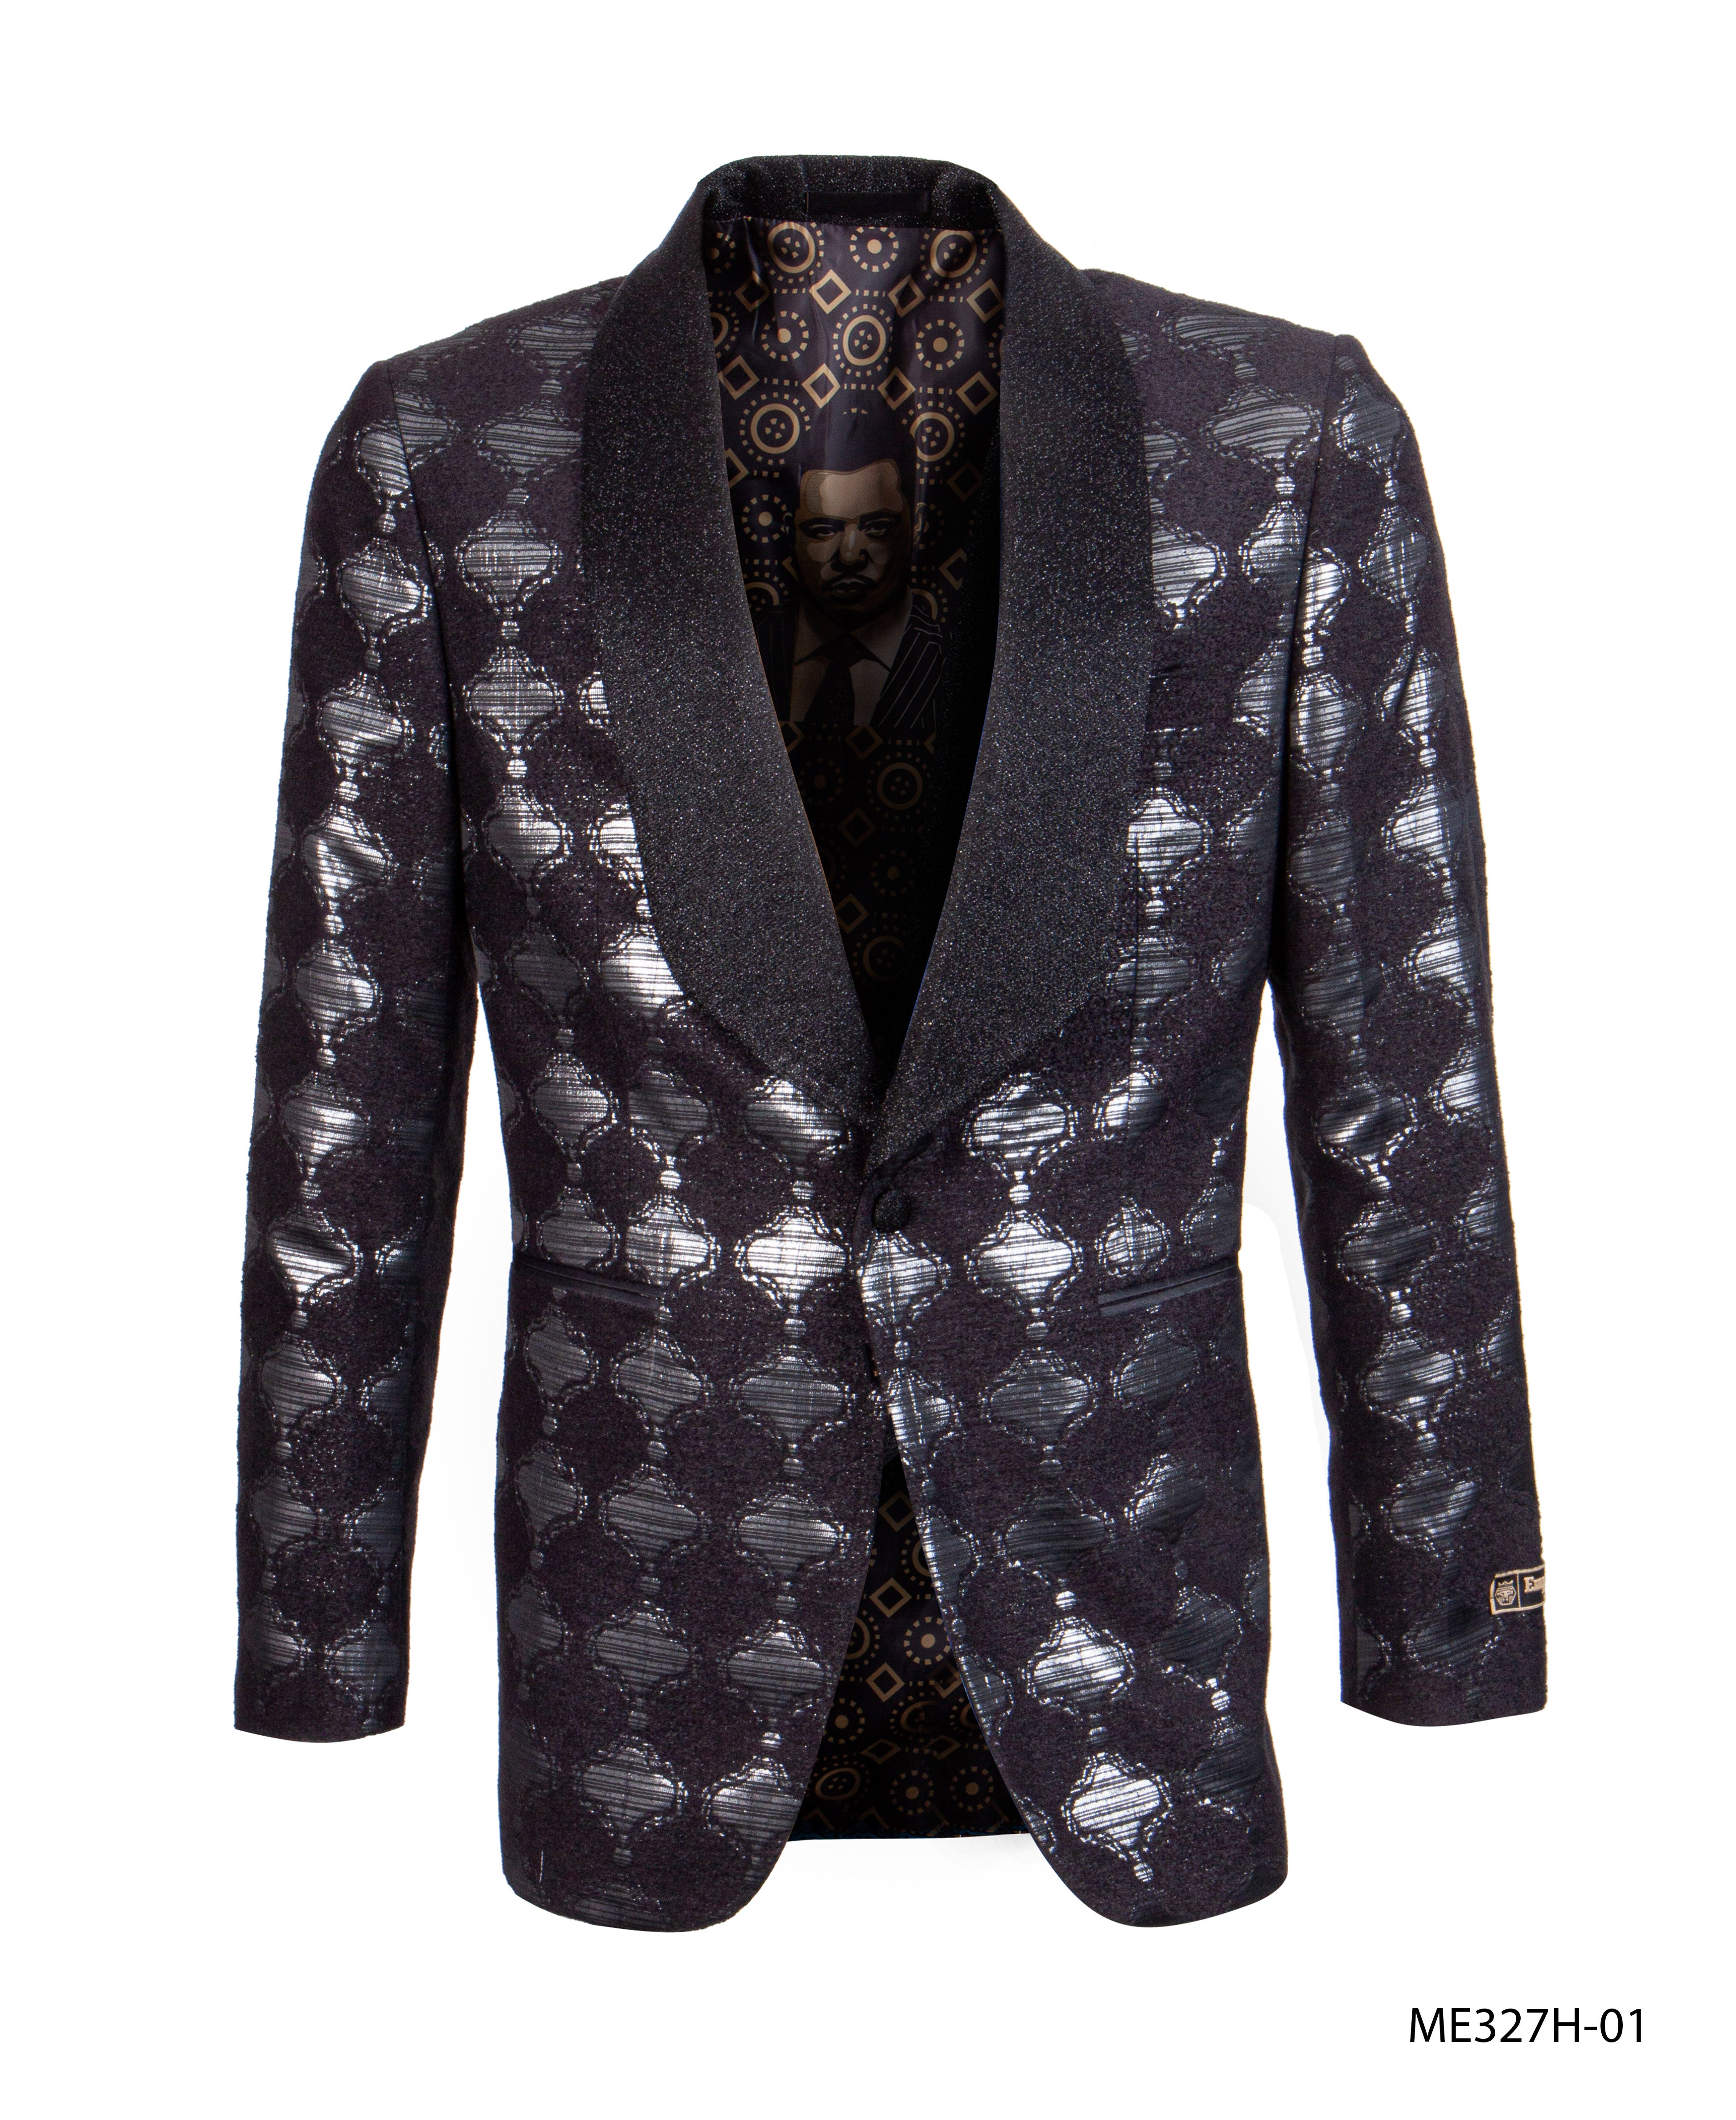 Black Empire Show Blazers Formal Dinner Suit Jackets For Men ME327H-01